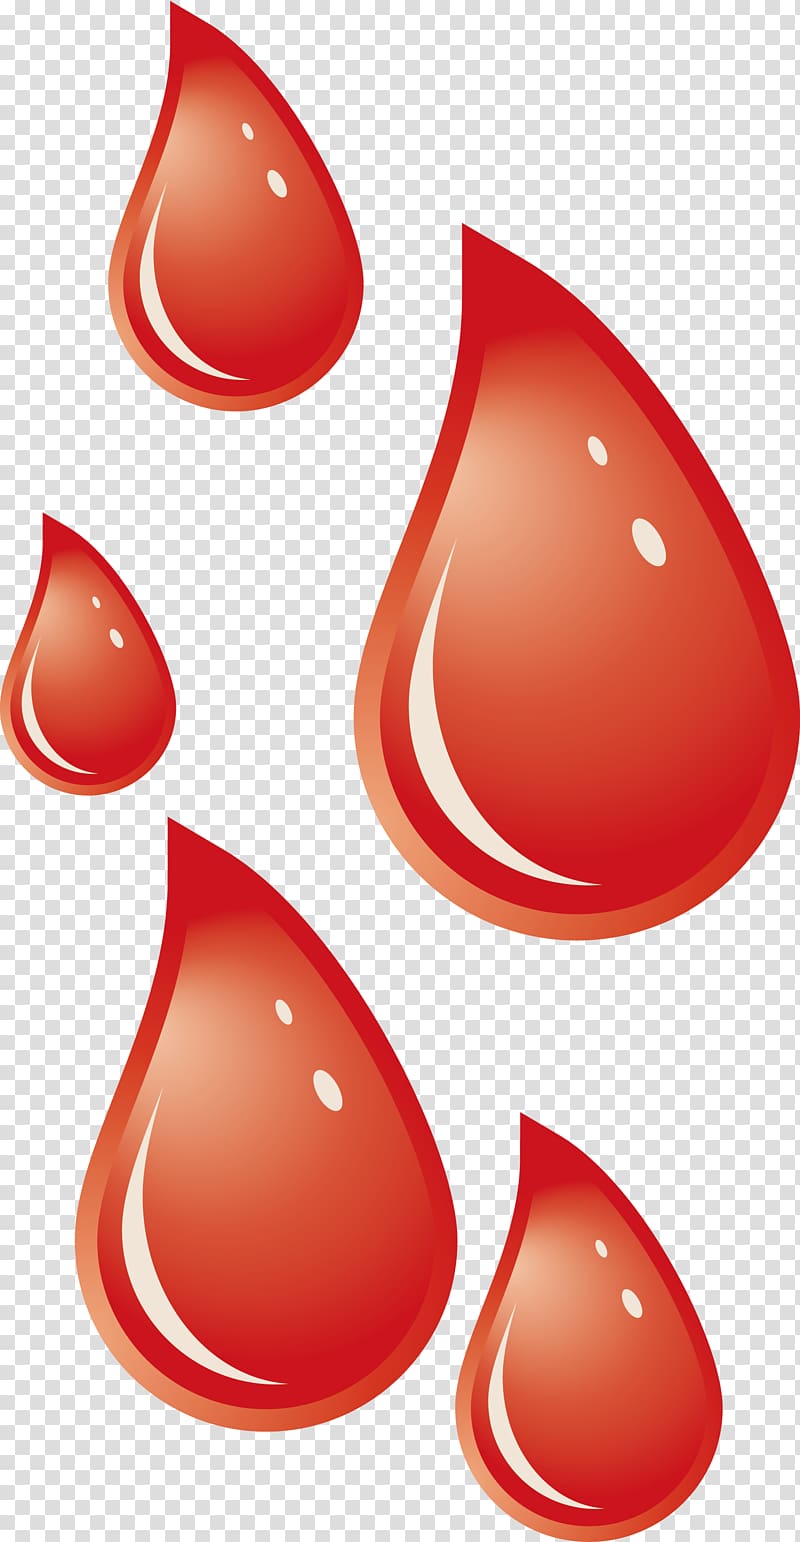 Blood PNG - Blood Donation, Blood Splatter, Blood Drop, Bloody